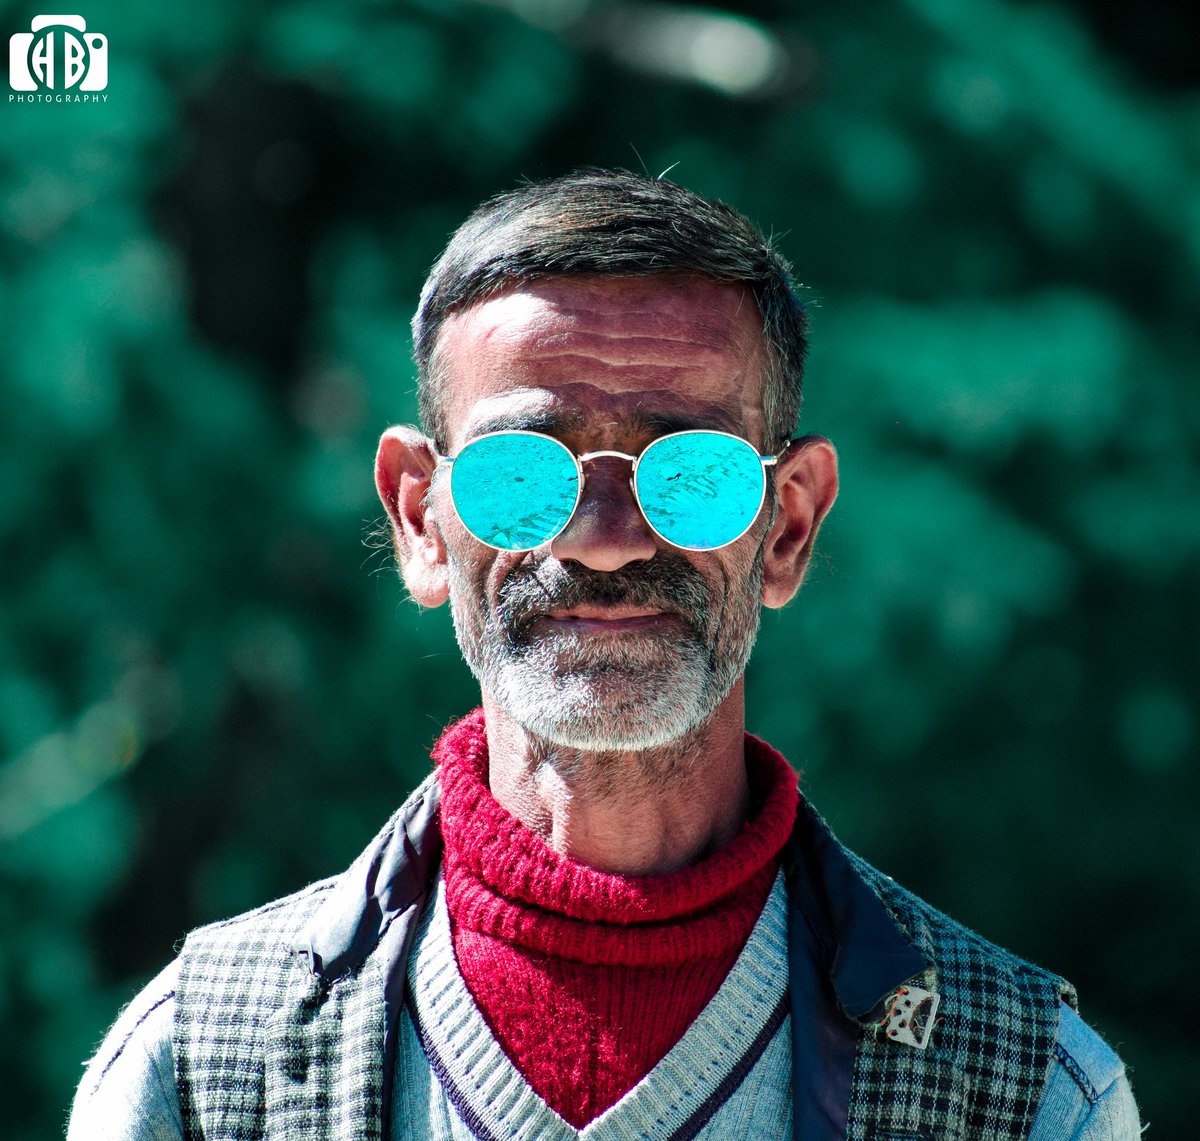 Desi Swag! 
#tbt #streetphotography #oph #india #himalayangeographic #yourshot_india #500px #himachalpradesh #swagsadadesi #swag #instagram #dslr #clickindiaclick #streetjournel #mangofolk #kufri #mypixeldiary #lensculture #people #peopleinfinity #portrait #portraitgallery